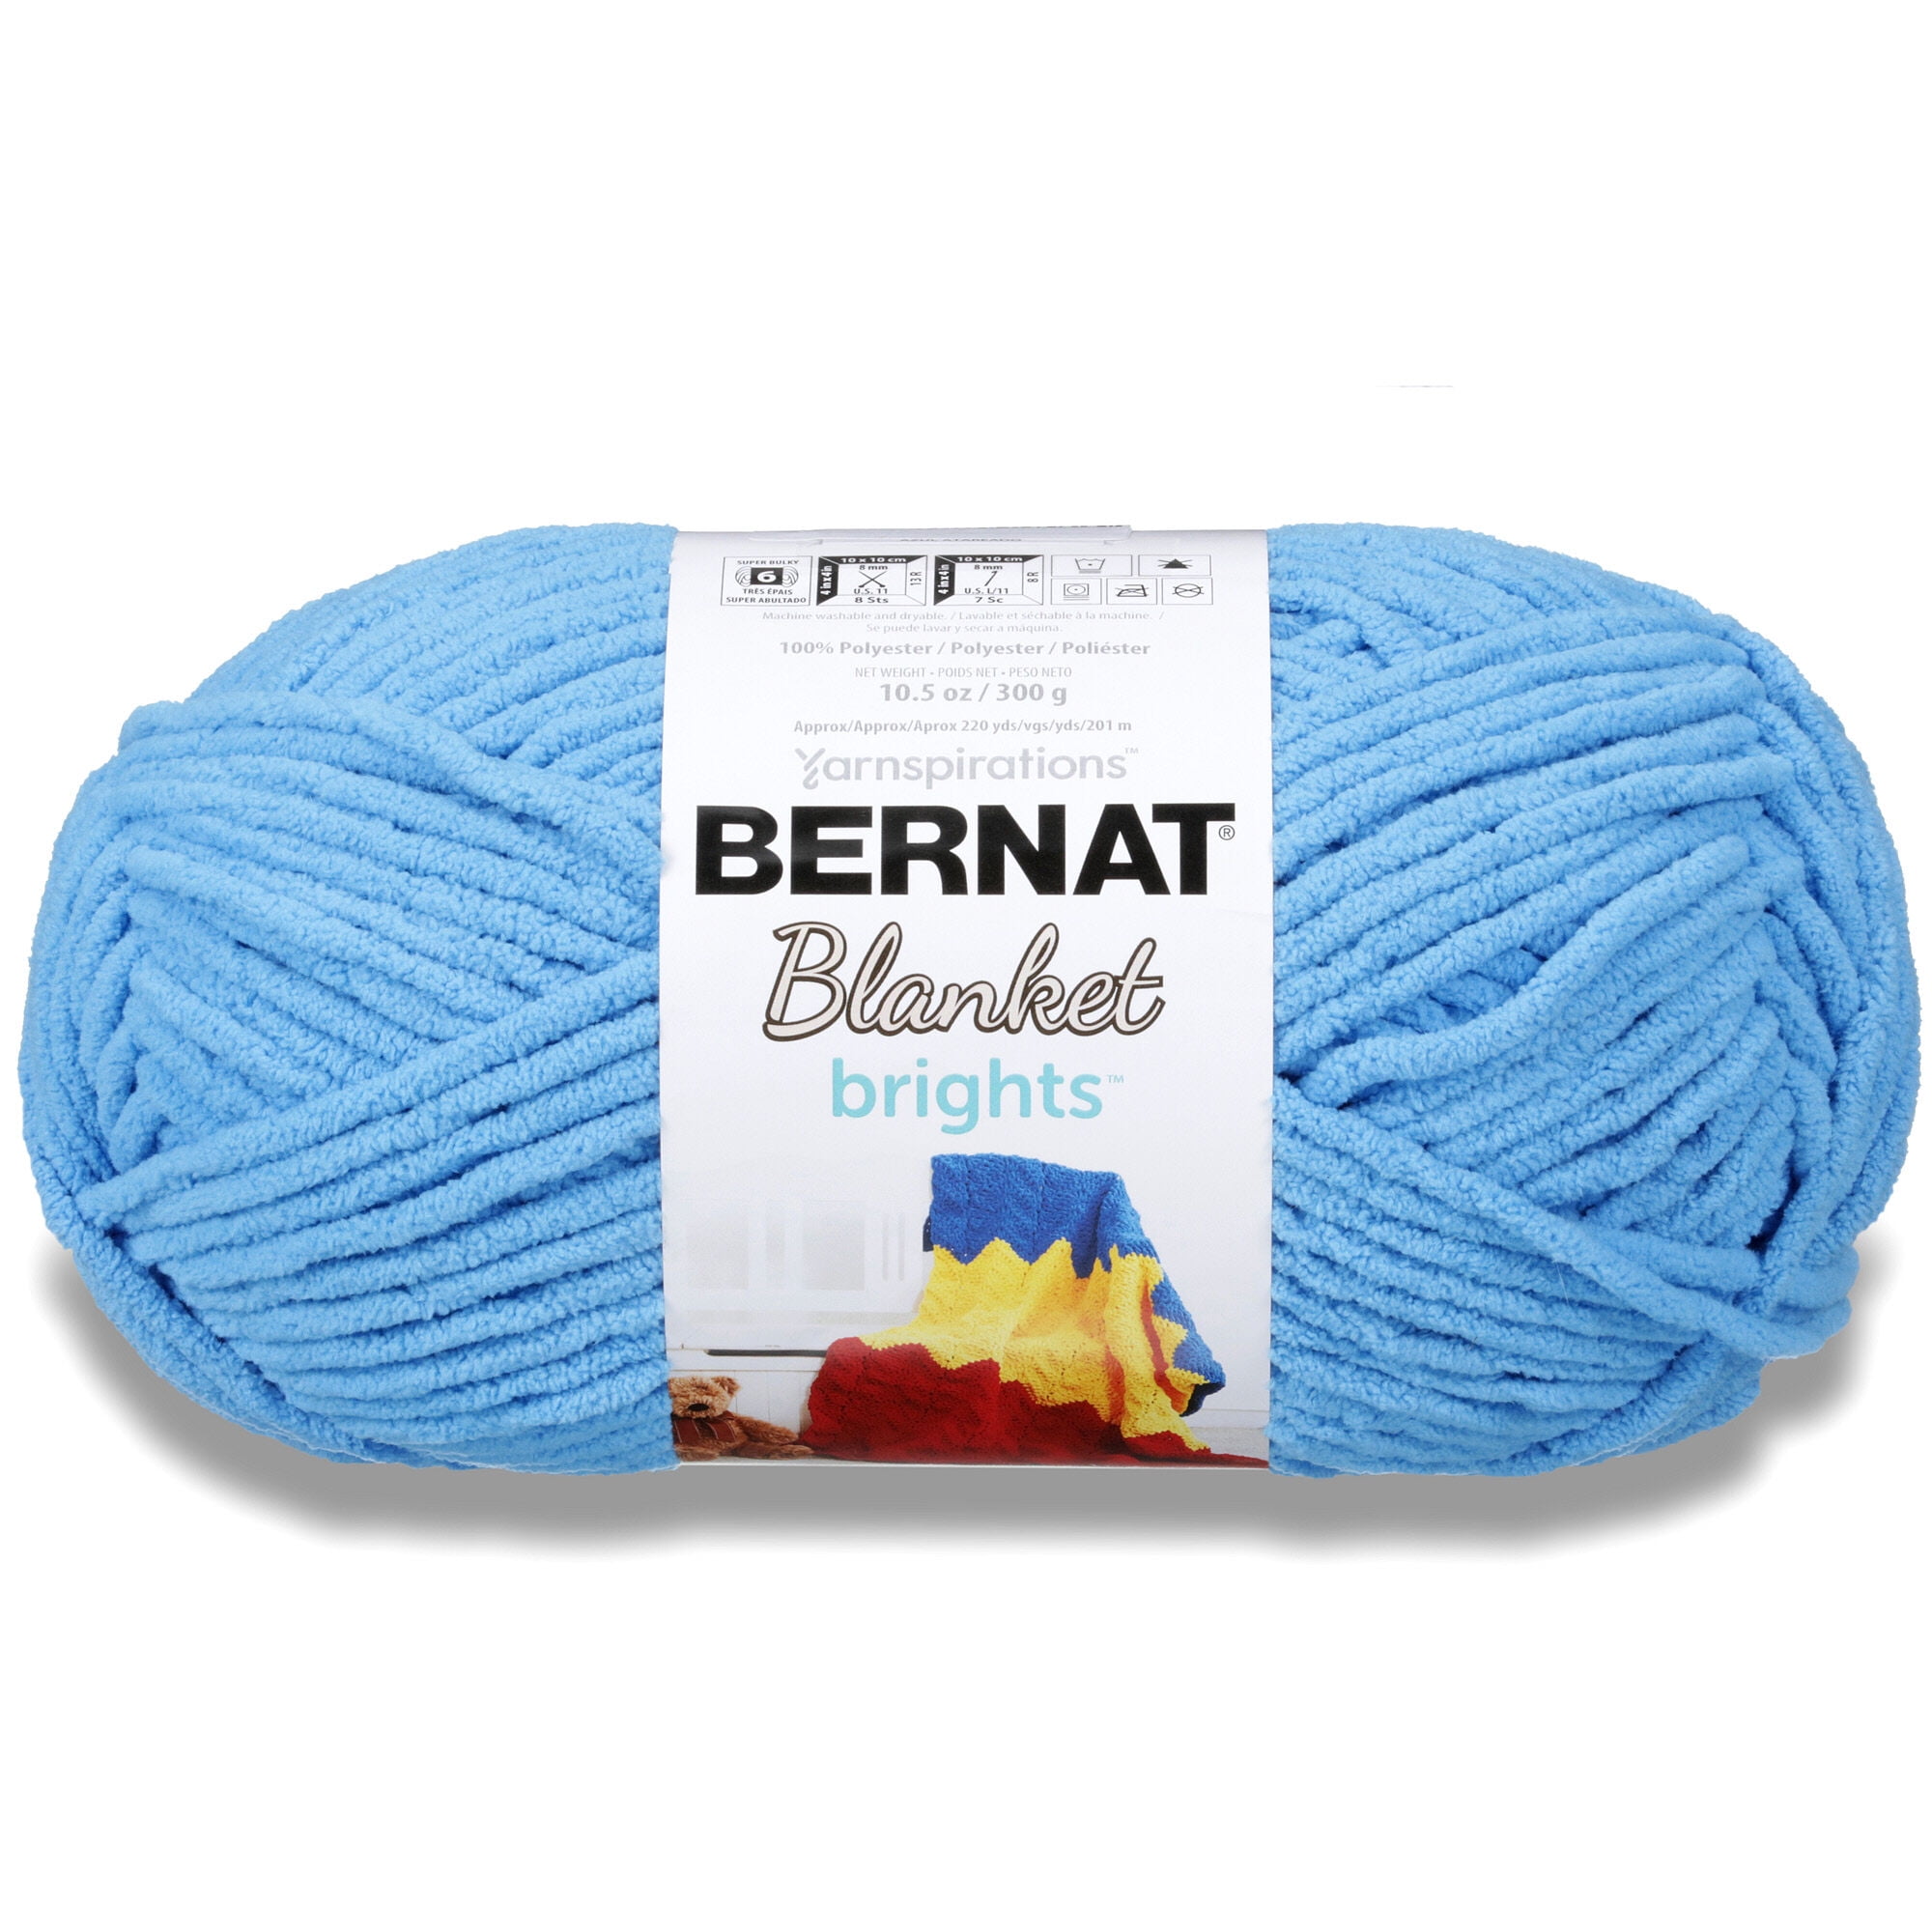 Bernat Super Value Yarn LOT ~ #8879 Sky Blue~ 8.2 OZ Total